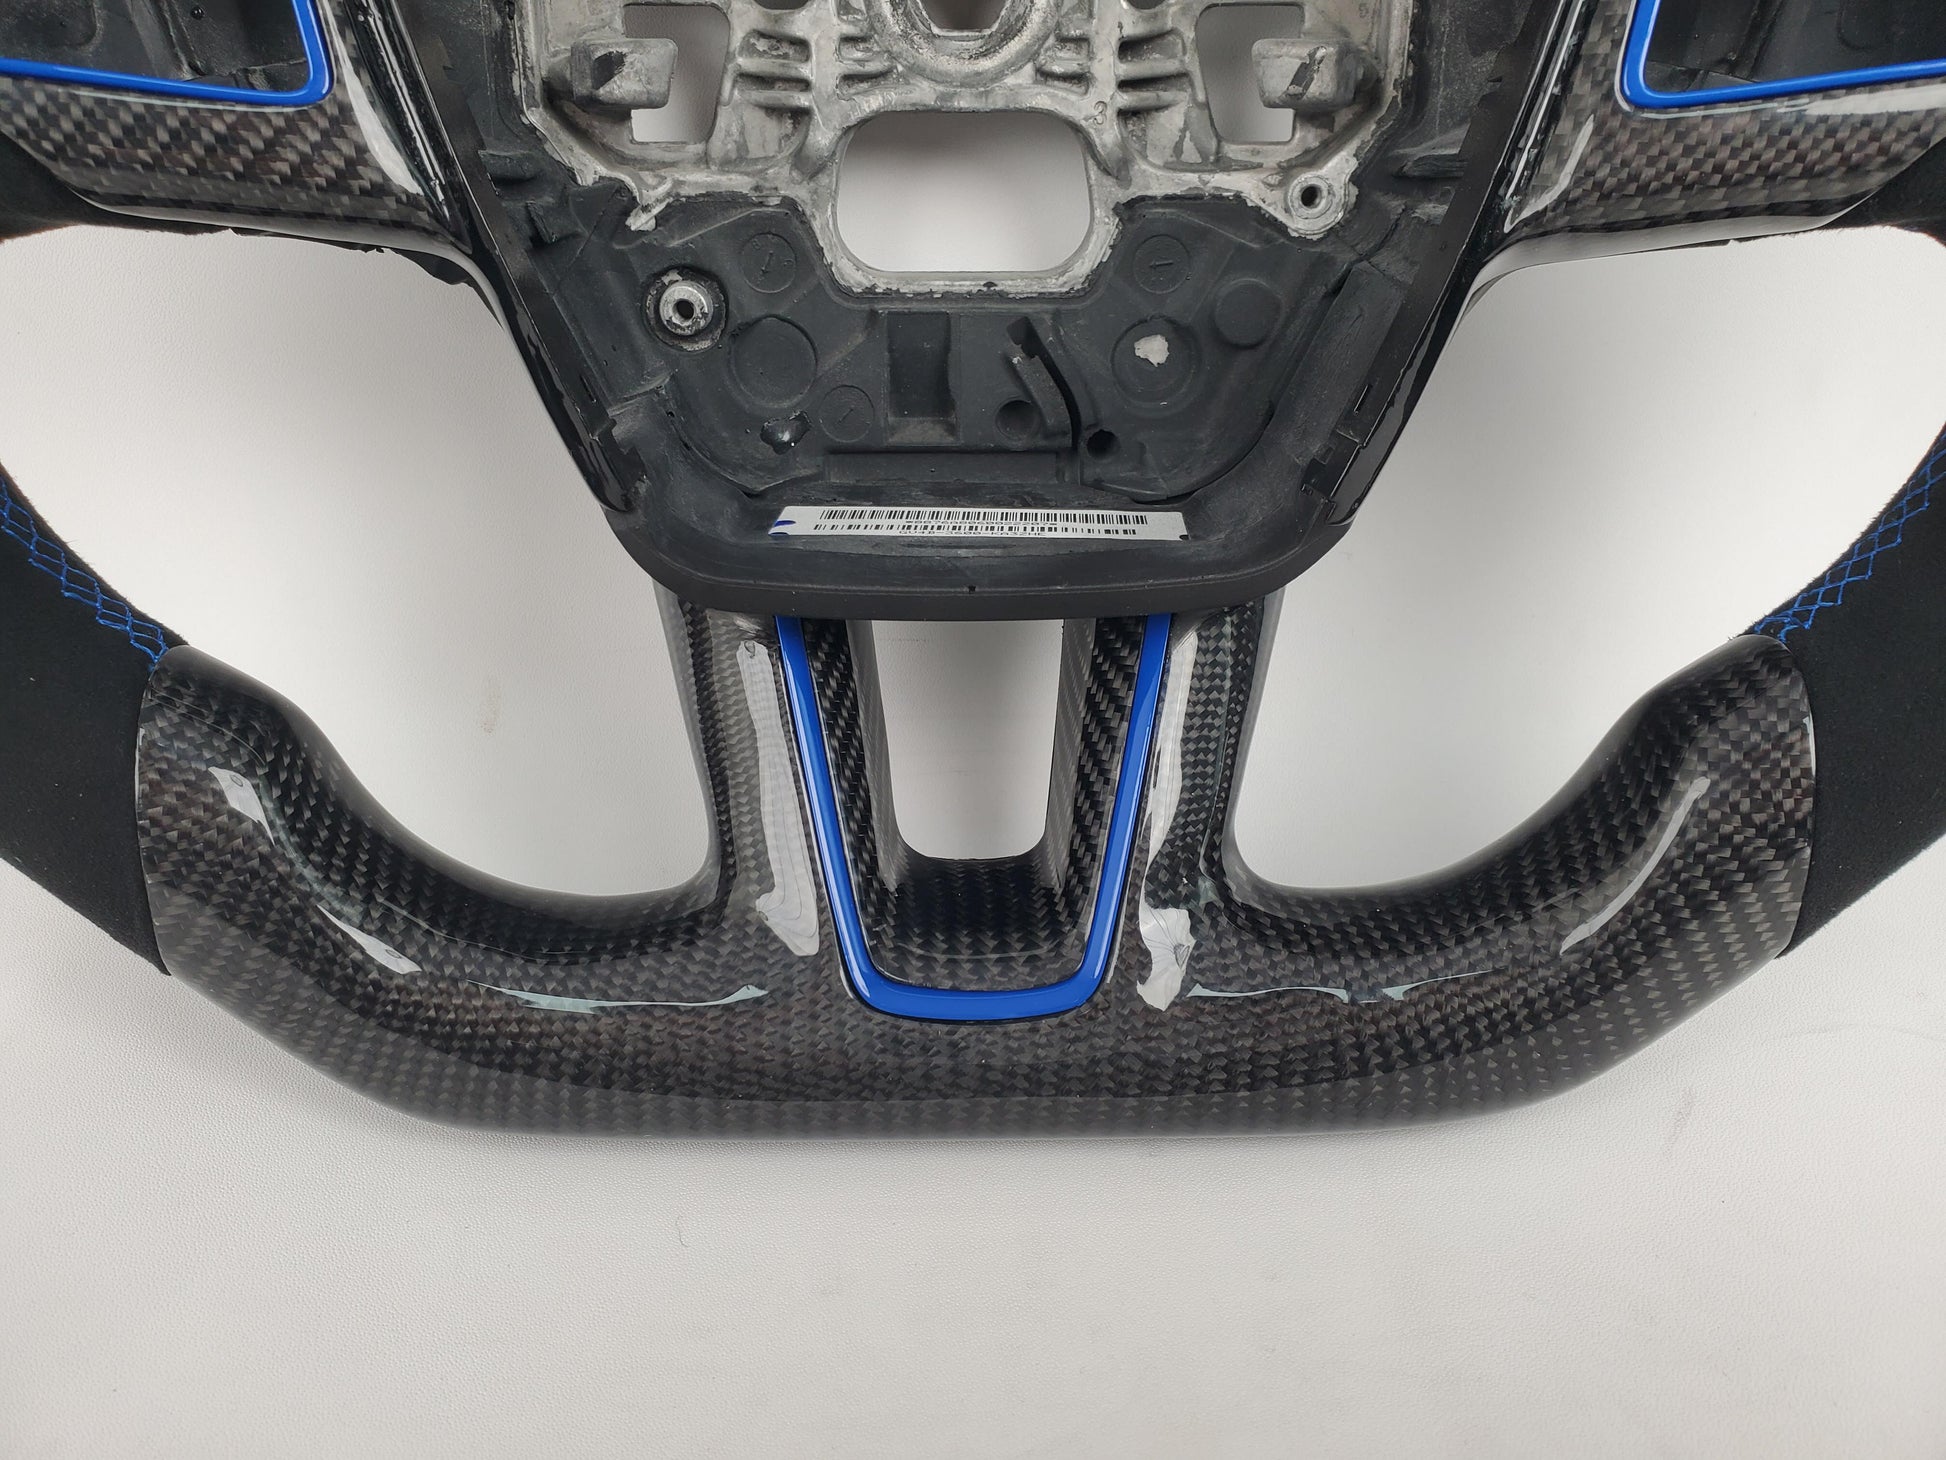 EZT Carbon Edition Custom Steering Wheel (Ford Focus RS MK2